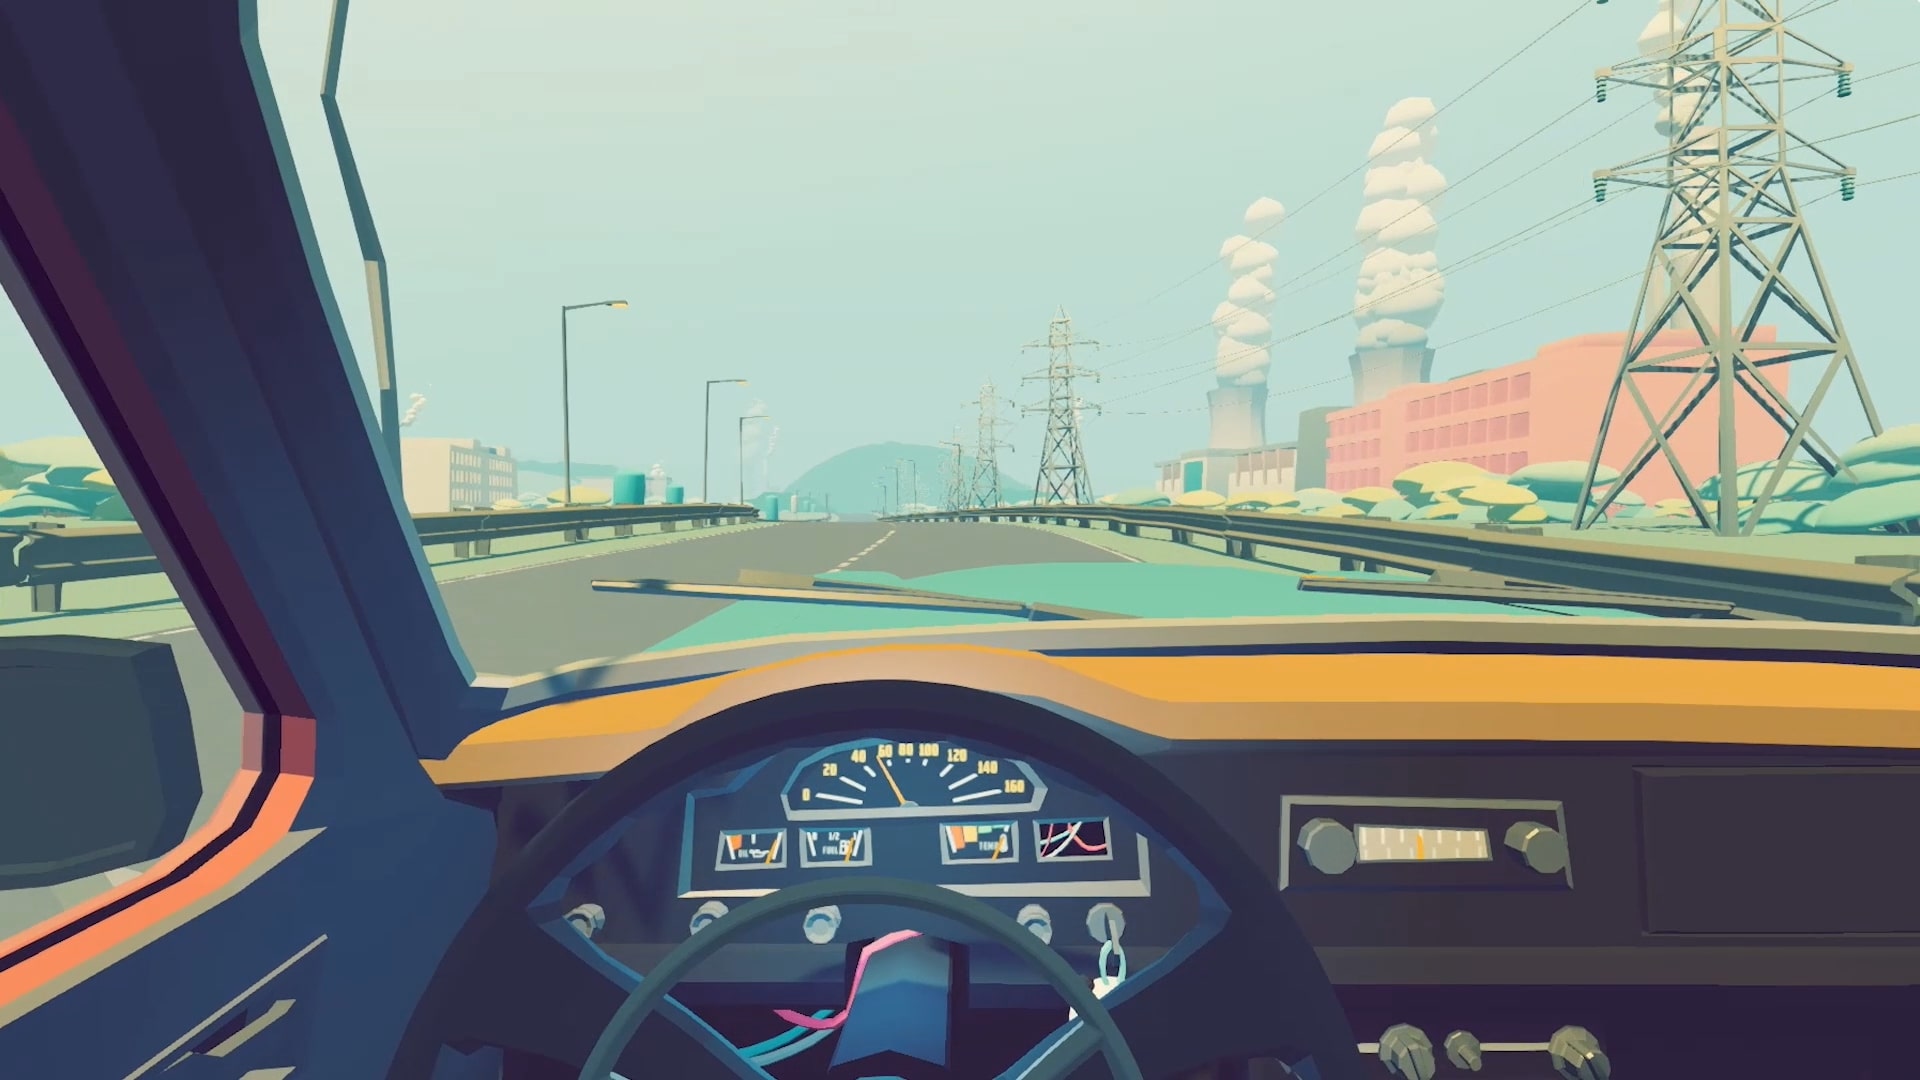 Road to Guangdong - Road Trip Car Driving Simulator Story-Based Indie Game (公路旅行驾驶游戏) Free Download